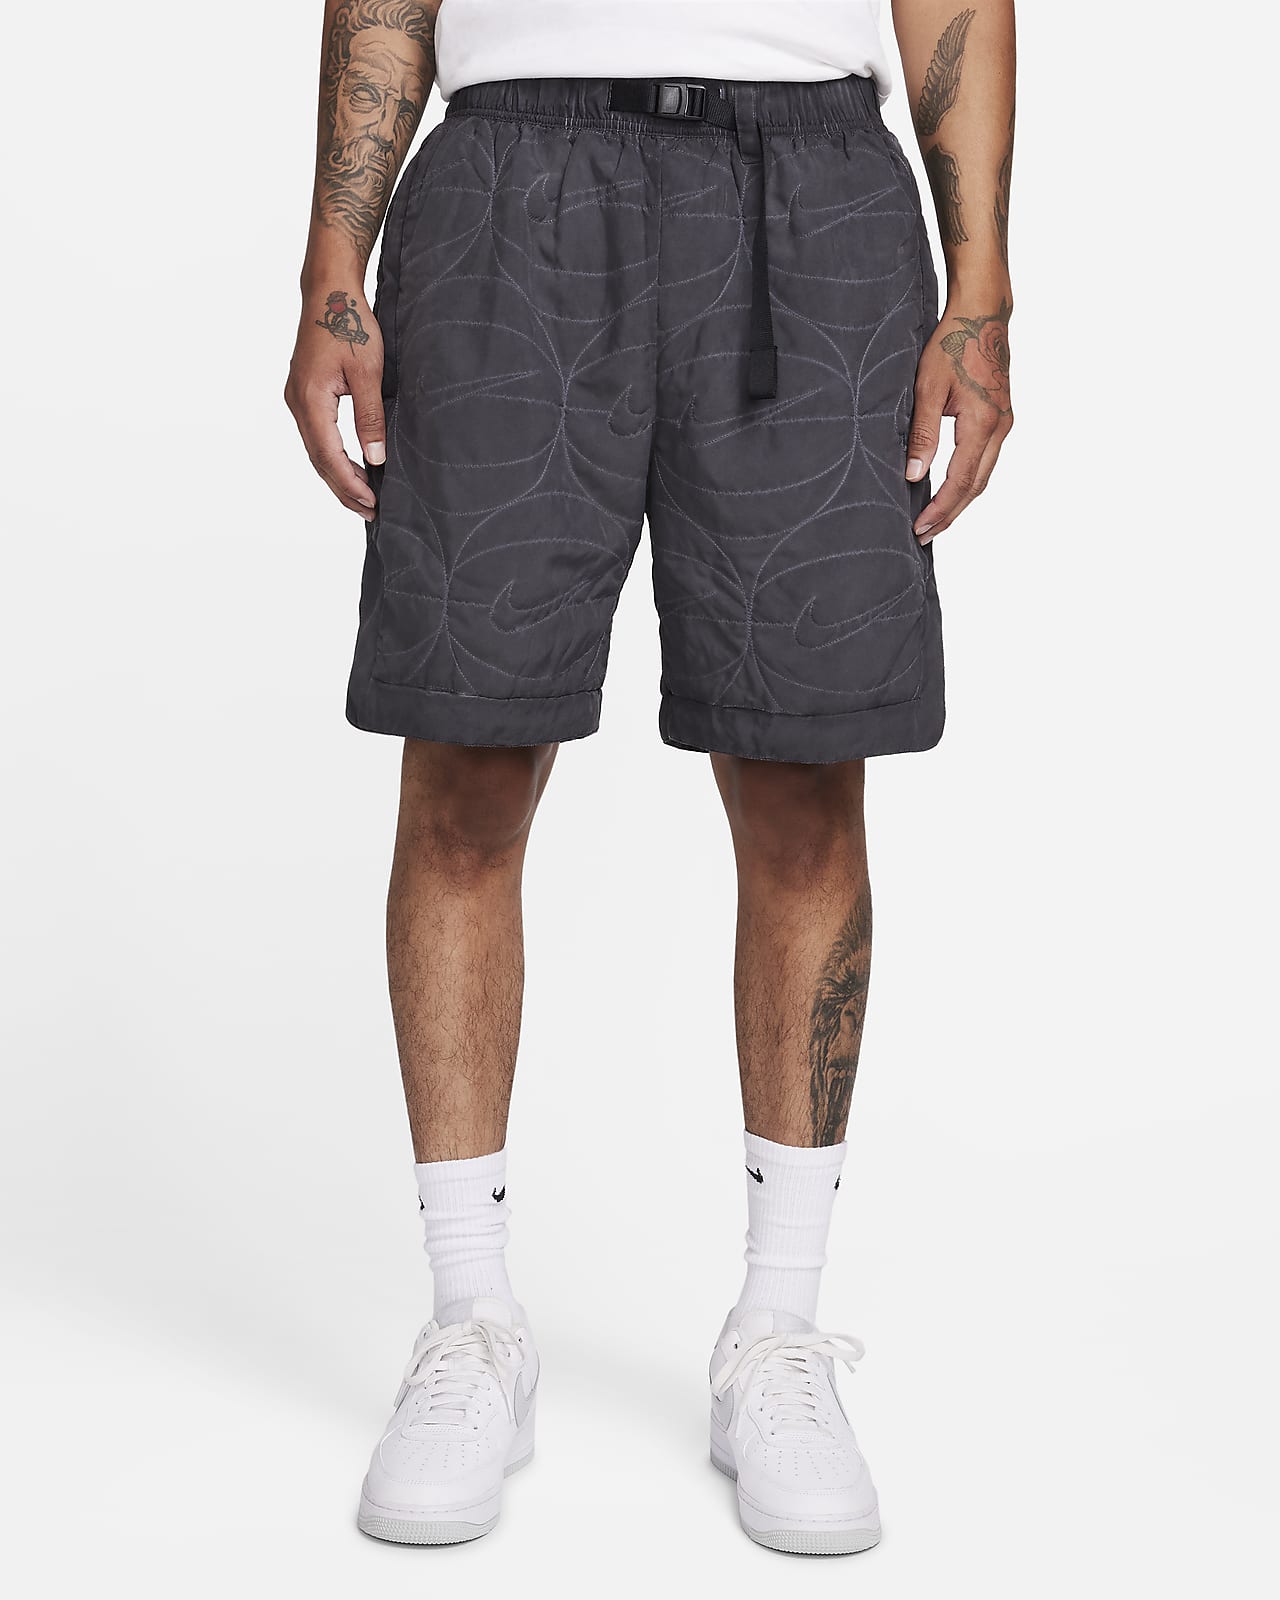 Nike Pantalons curts de teixit Woven amb farciment sintètic de 20 cm de bàsquet - Home